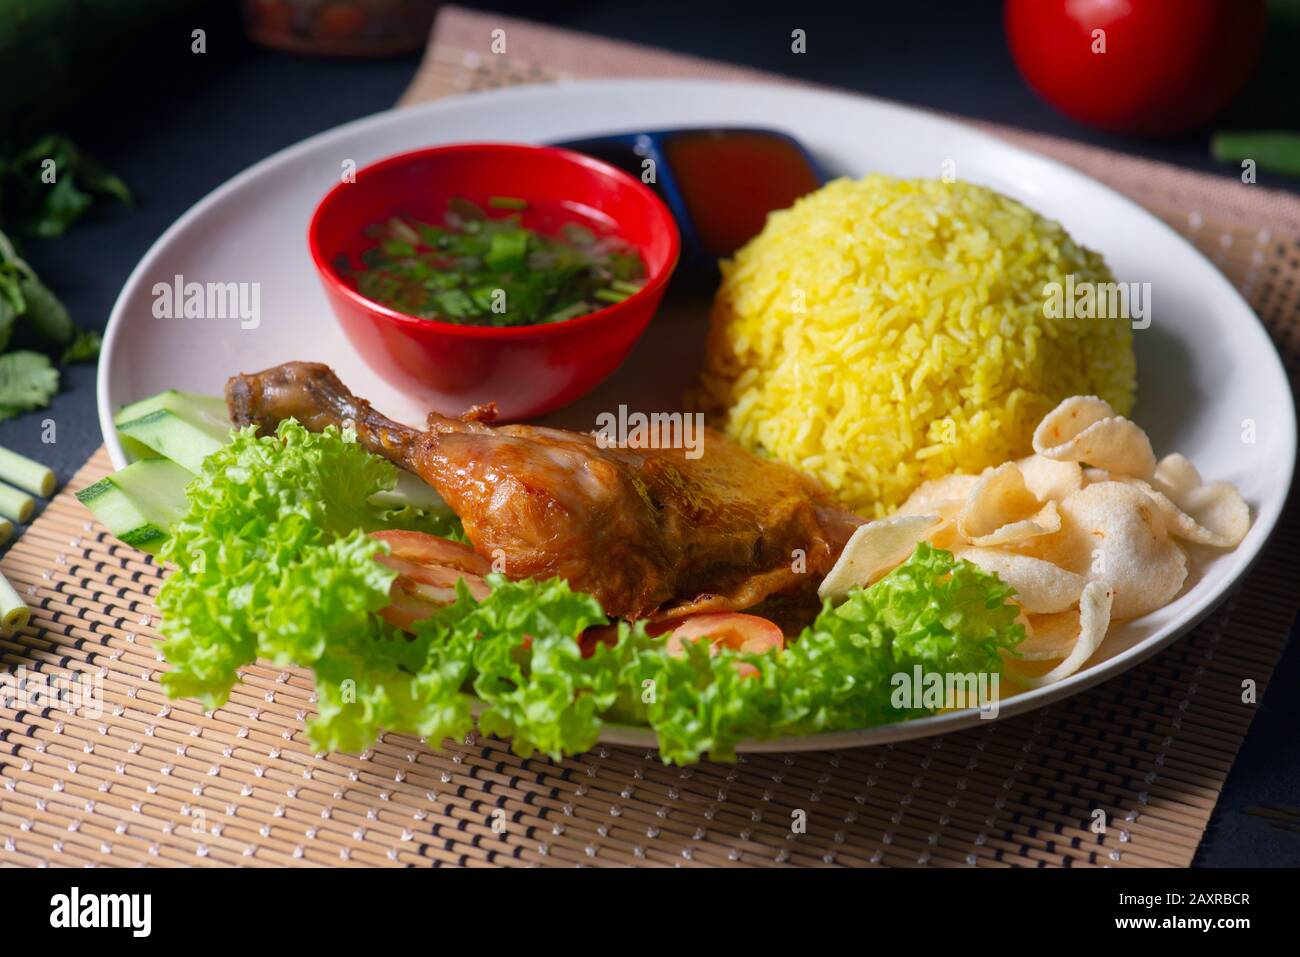 Ayam nasi